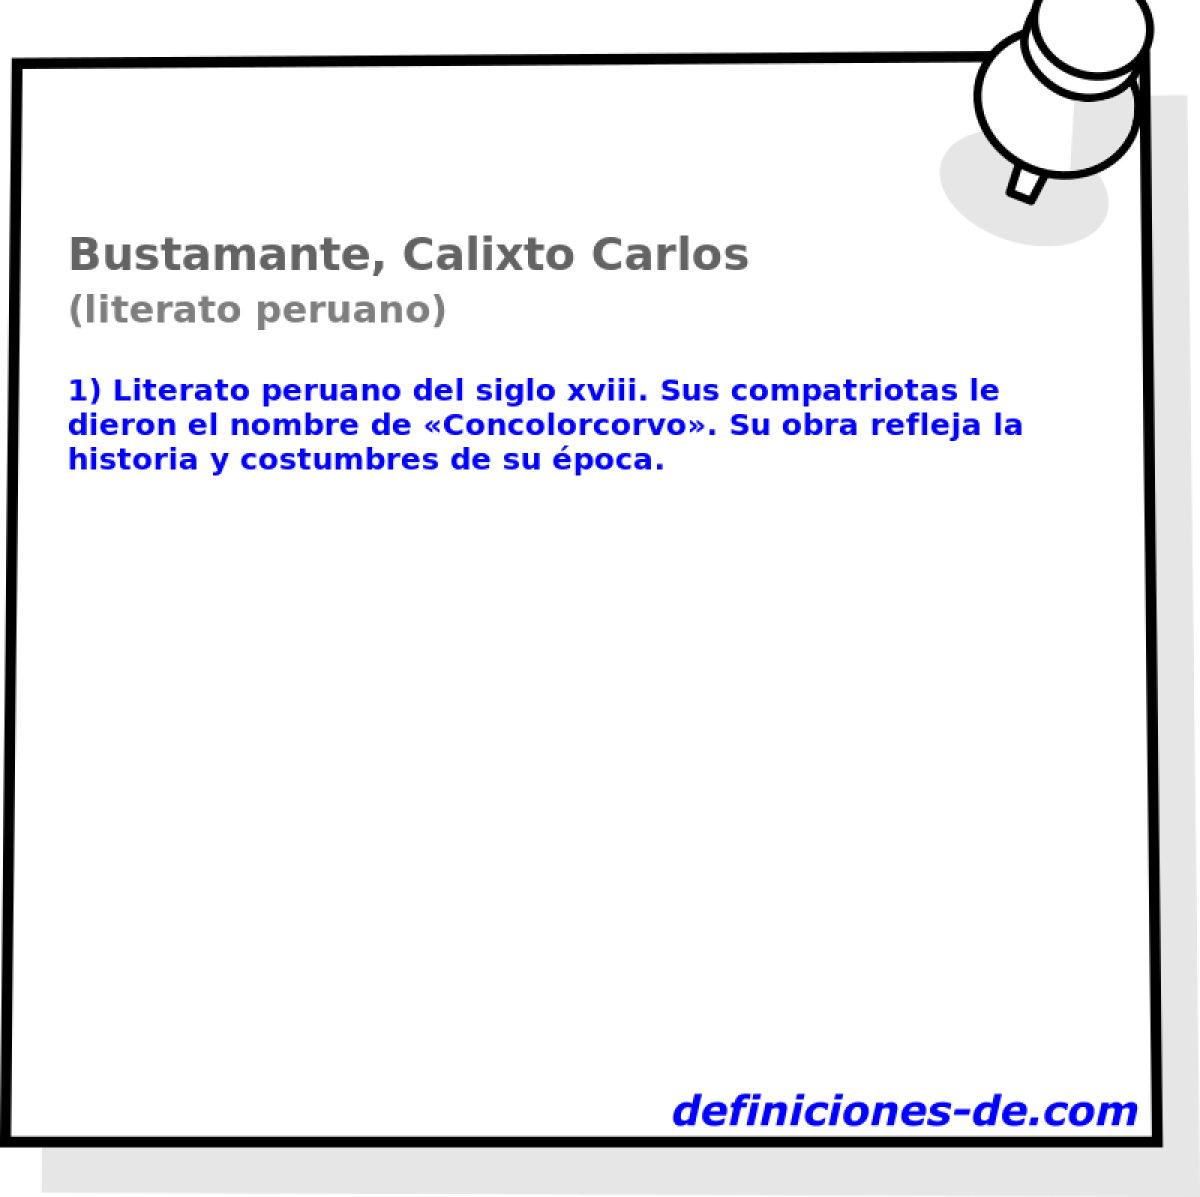 Bustamante, Calixto Carlos (literato peruano)